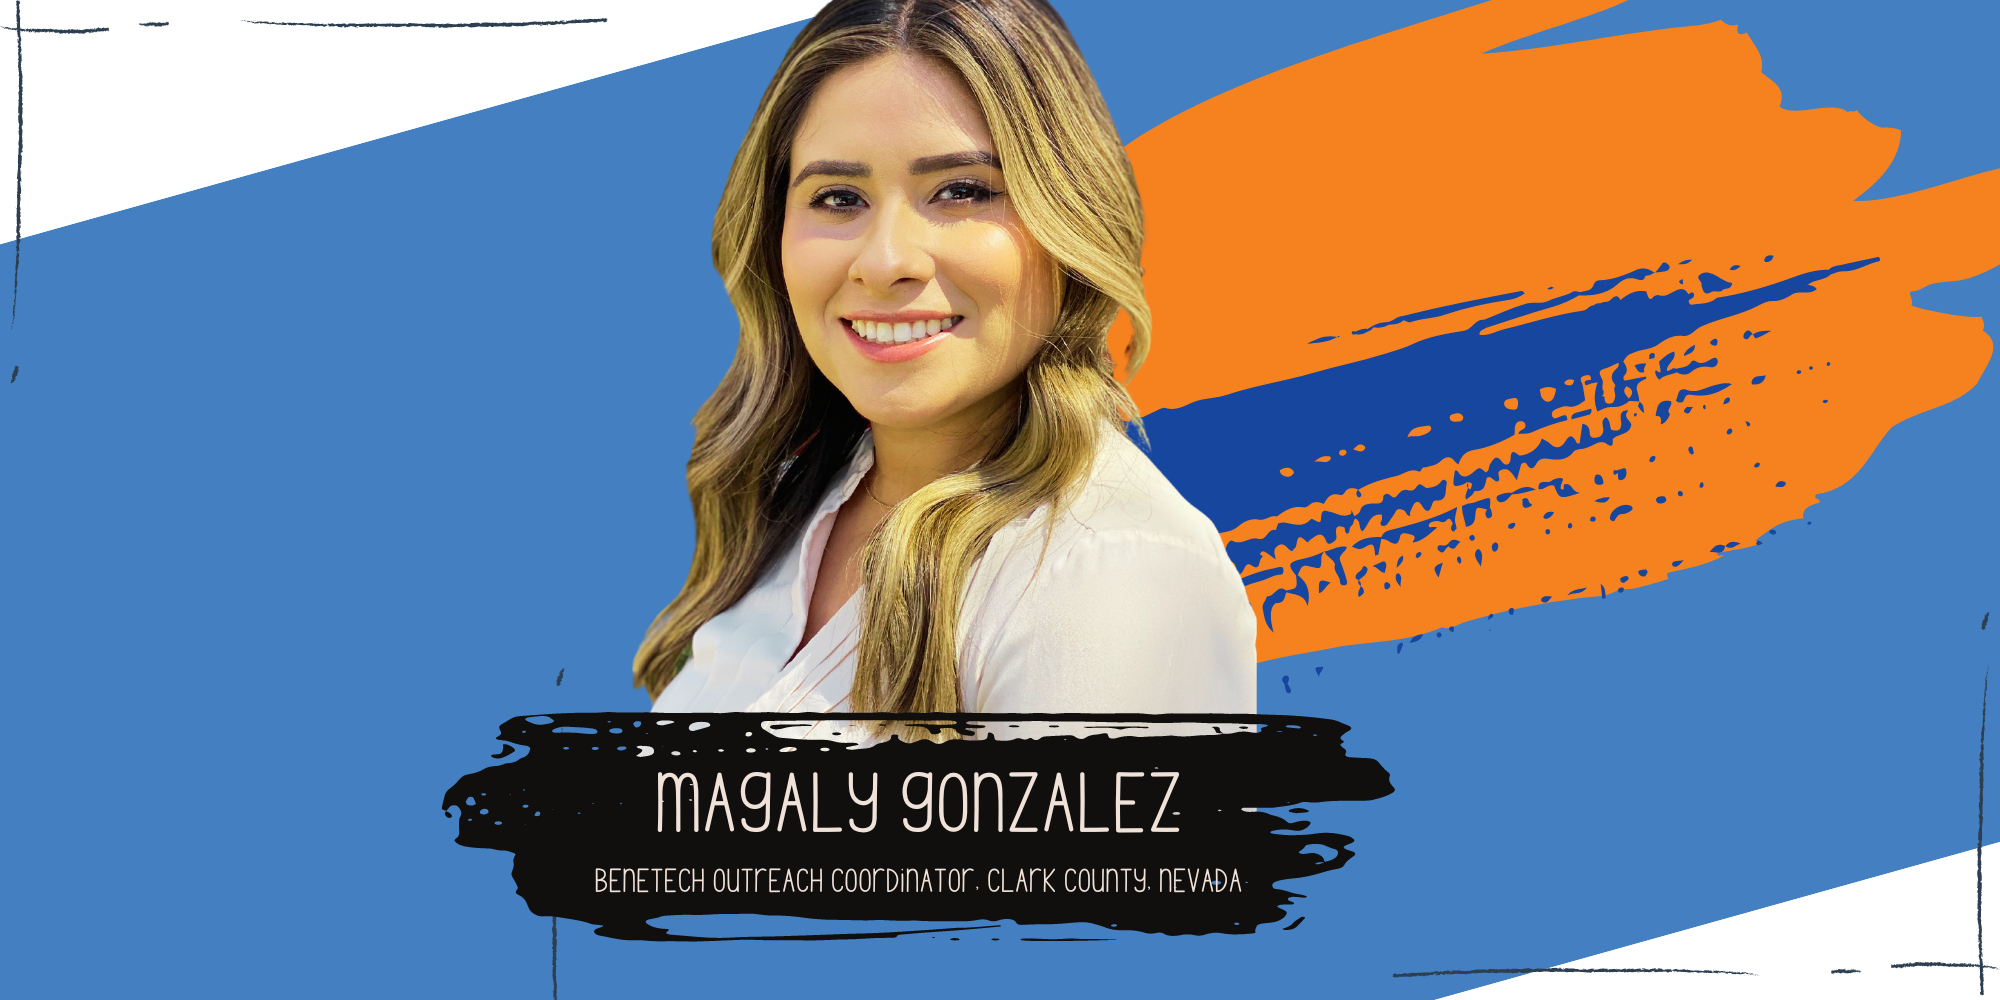 Magaly Gonzalez, Benetech’s Outreach Coordinator in Clark County, Nevada